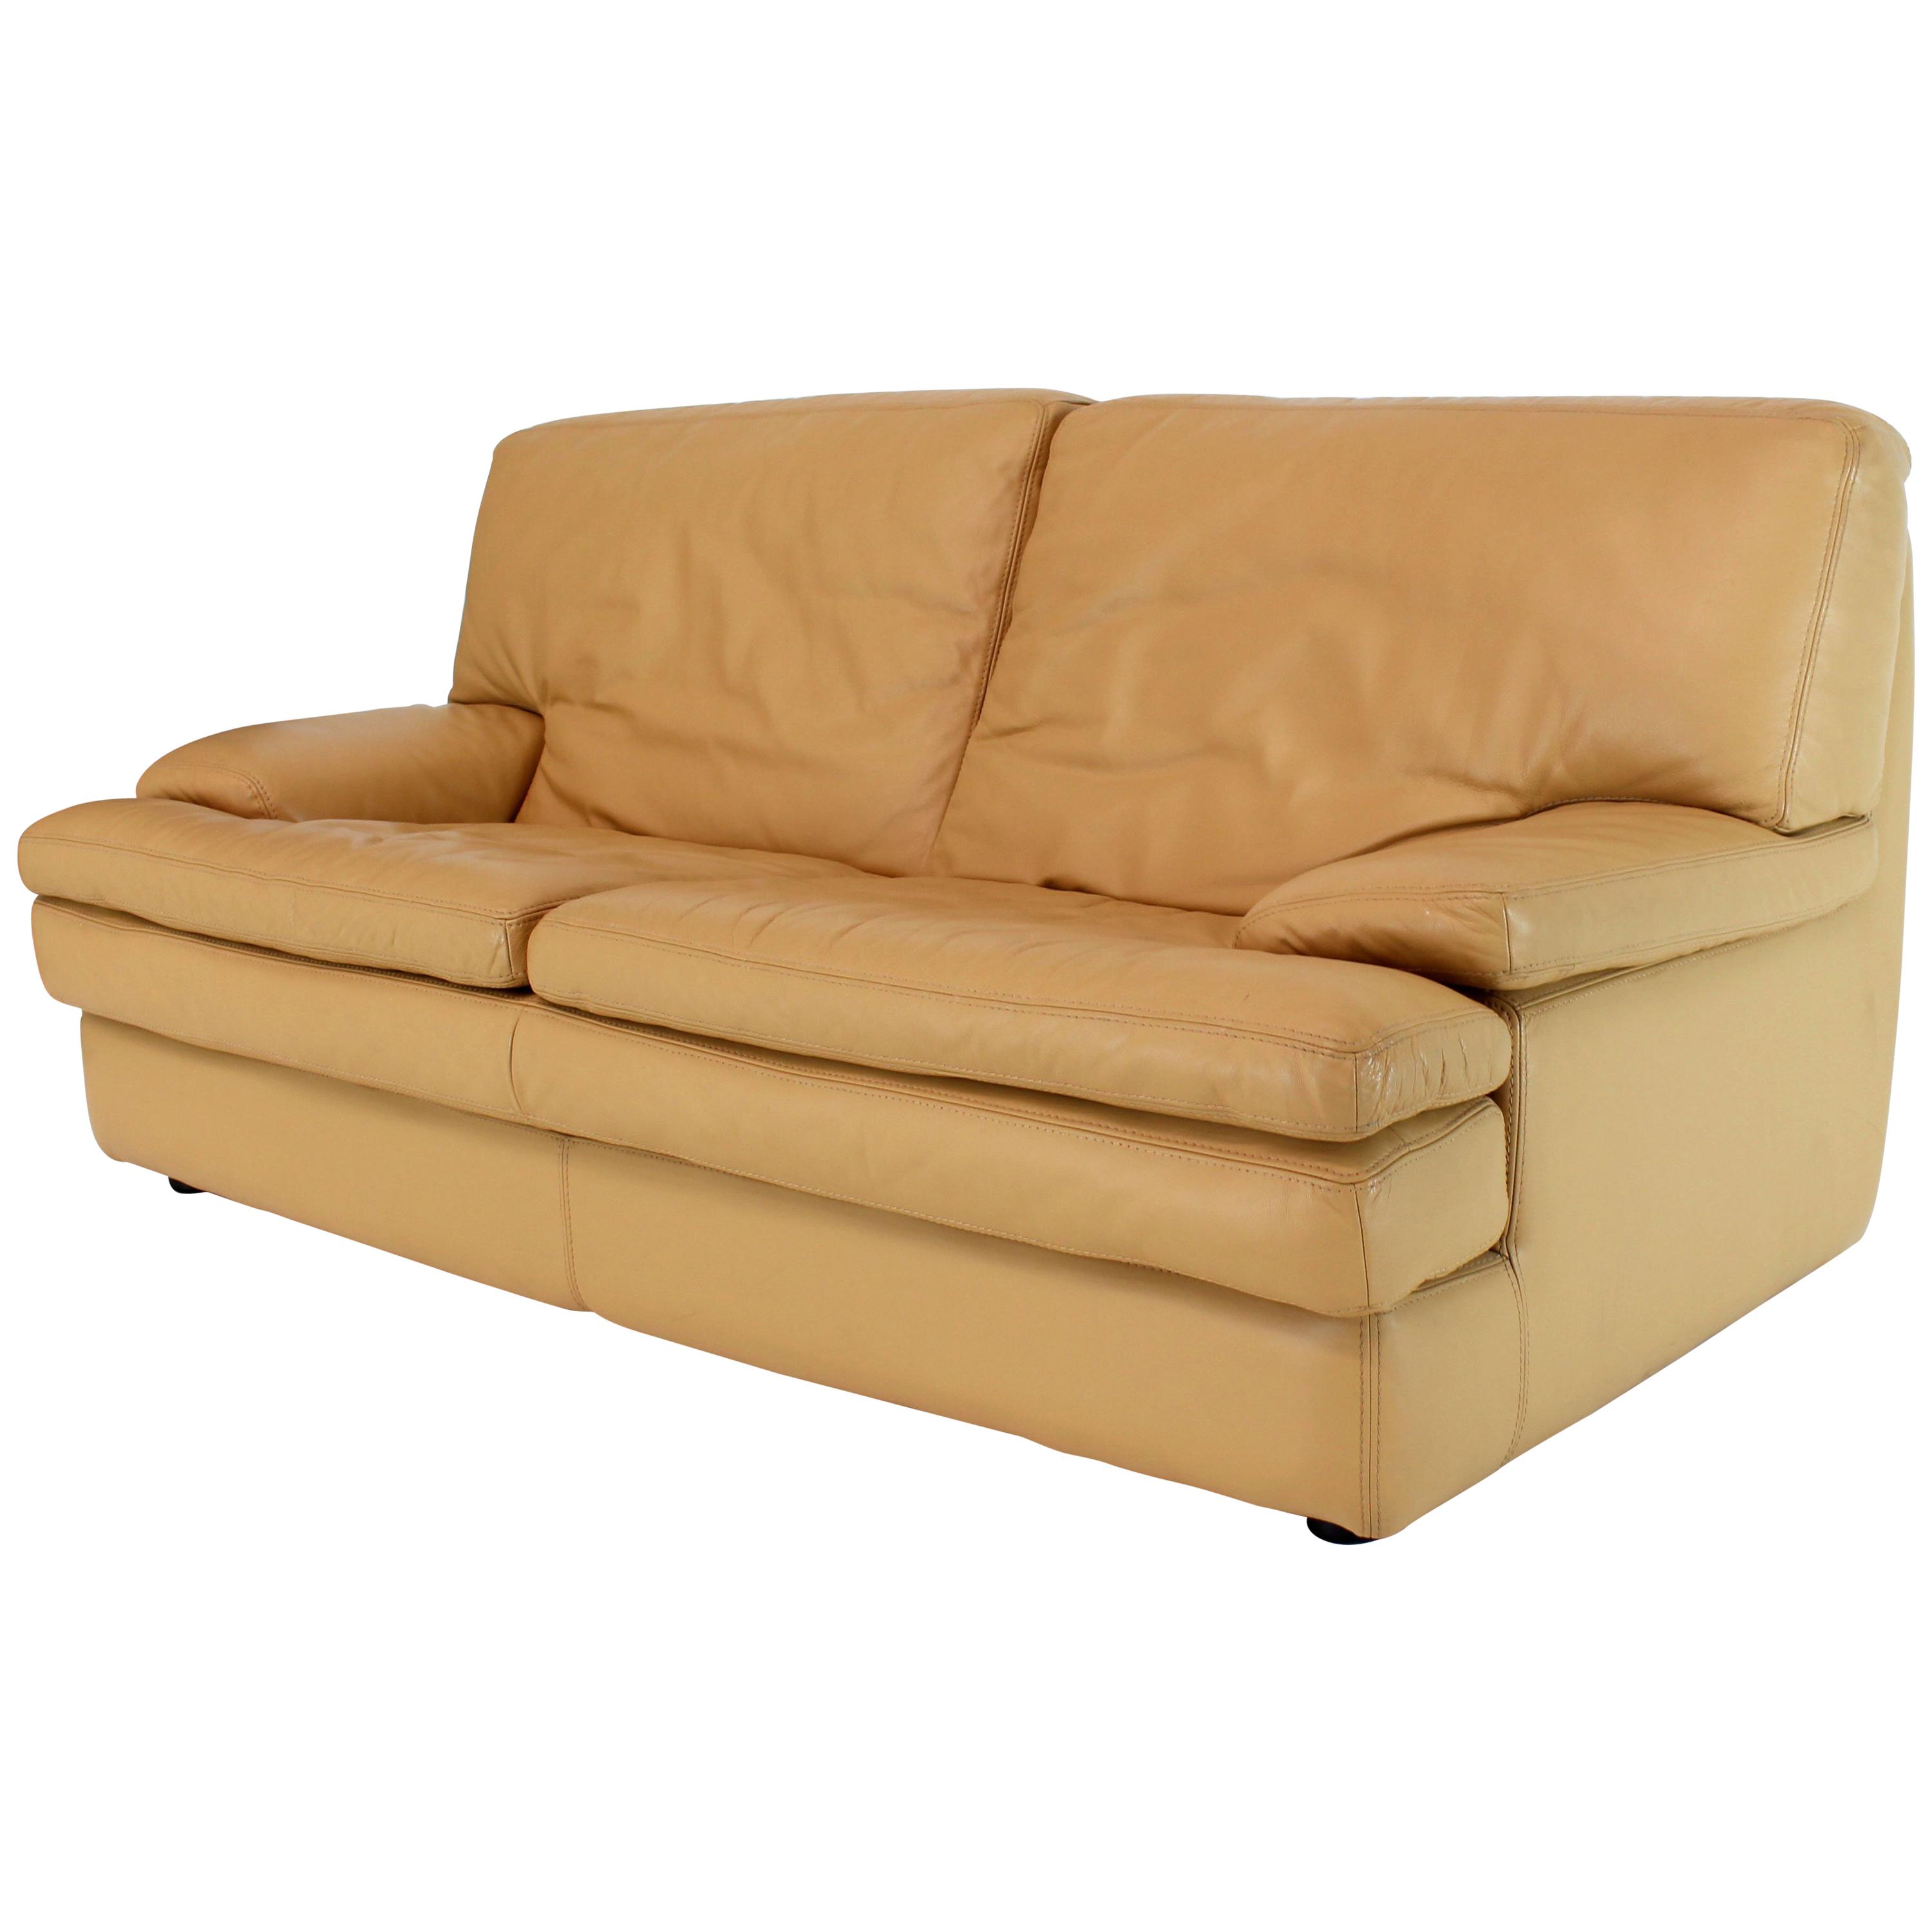 Roche Bobois Light Peach Leather Loveseat Small Sofa For Sale